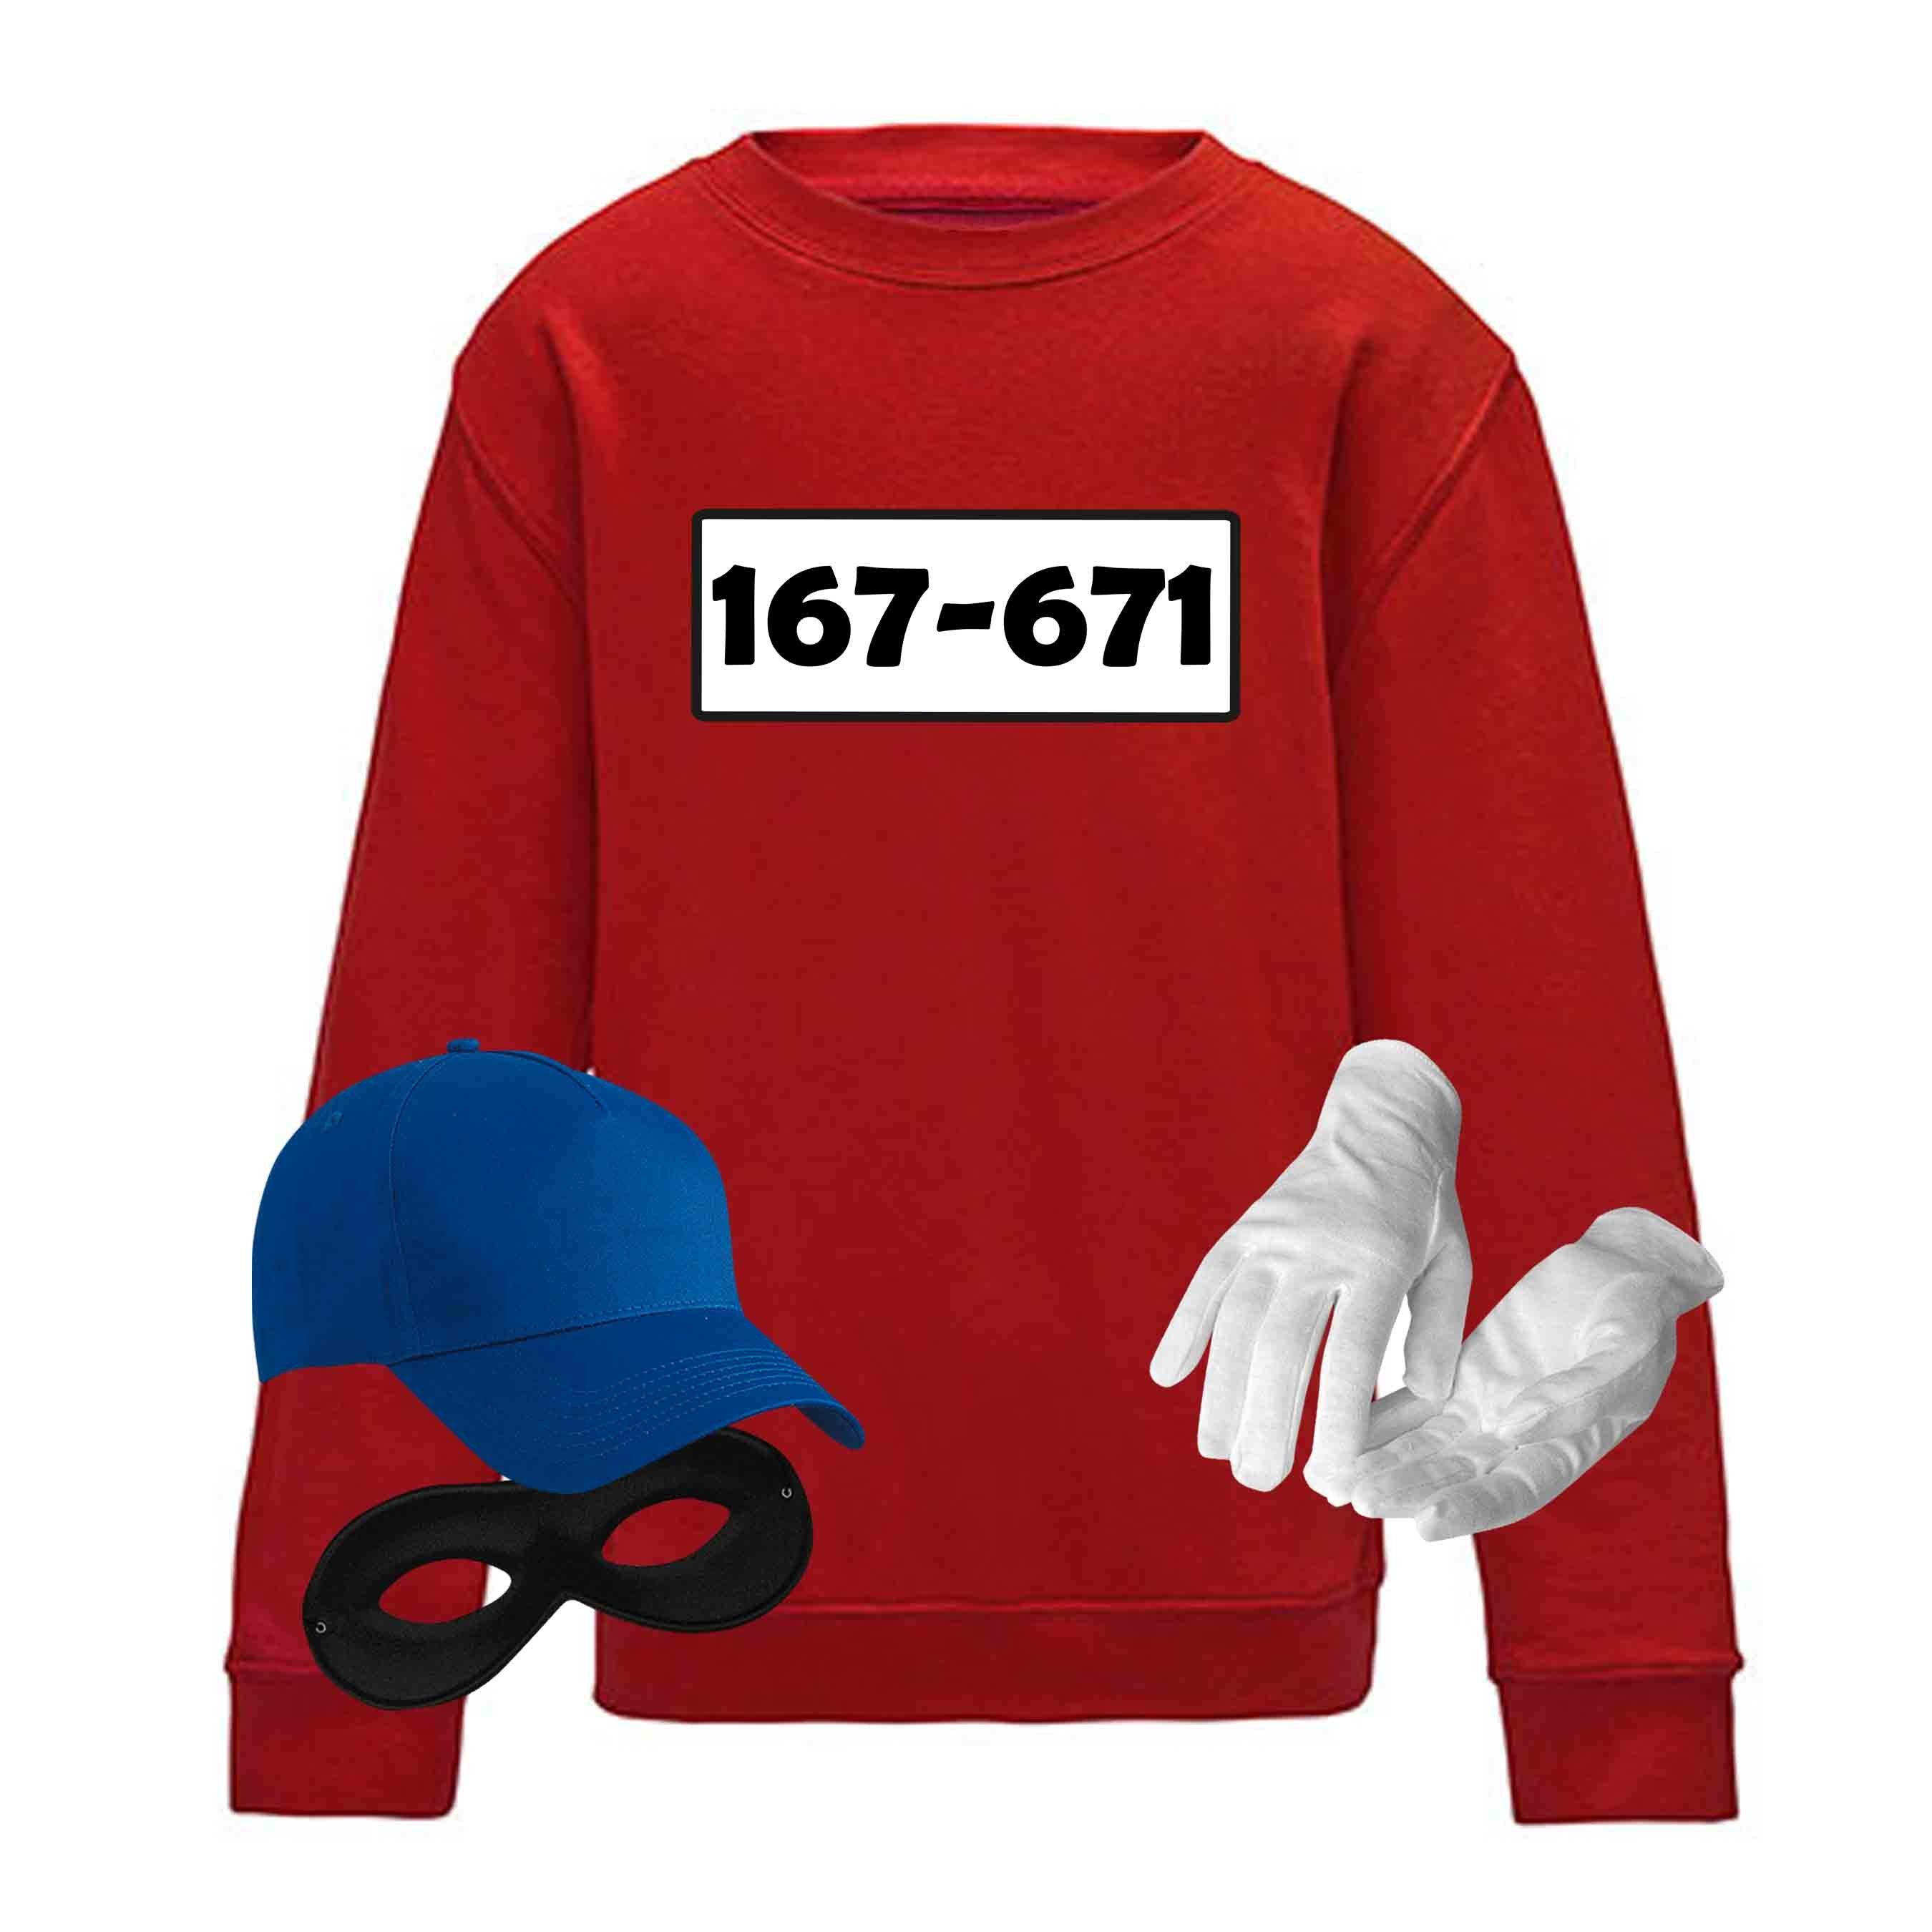 Jimmys Textilfactory Kostüm Panzerknacker Sweatshirt Deluxe+ Kostüm-Set Karneval Kinder 98-152, Shirt+Cap+Maske+Handschuhe